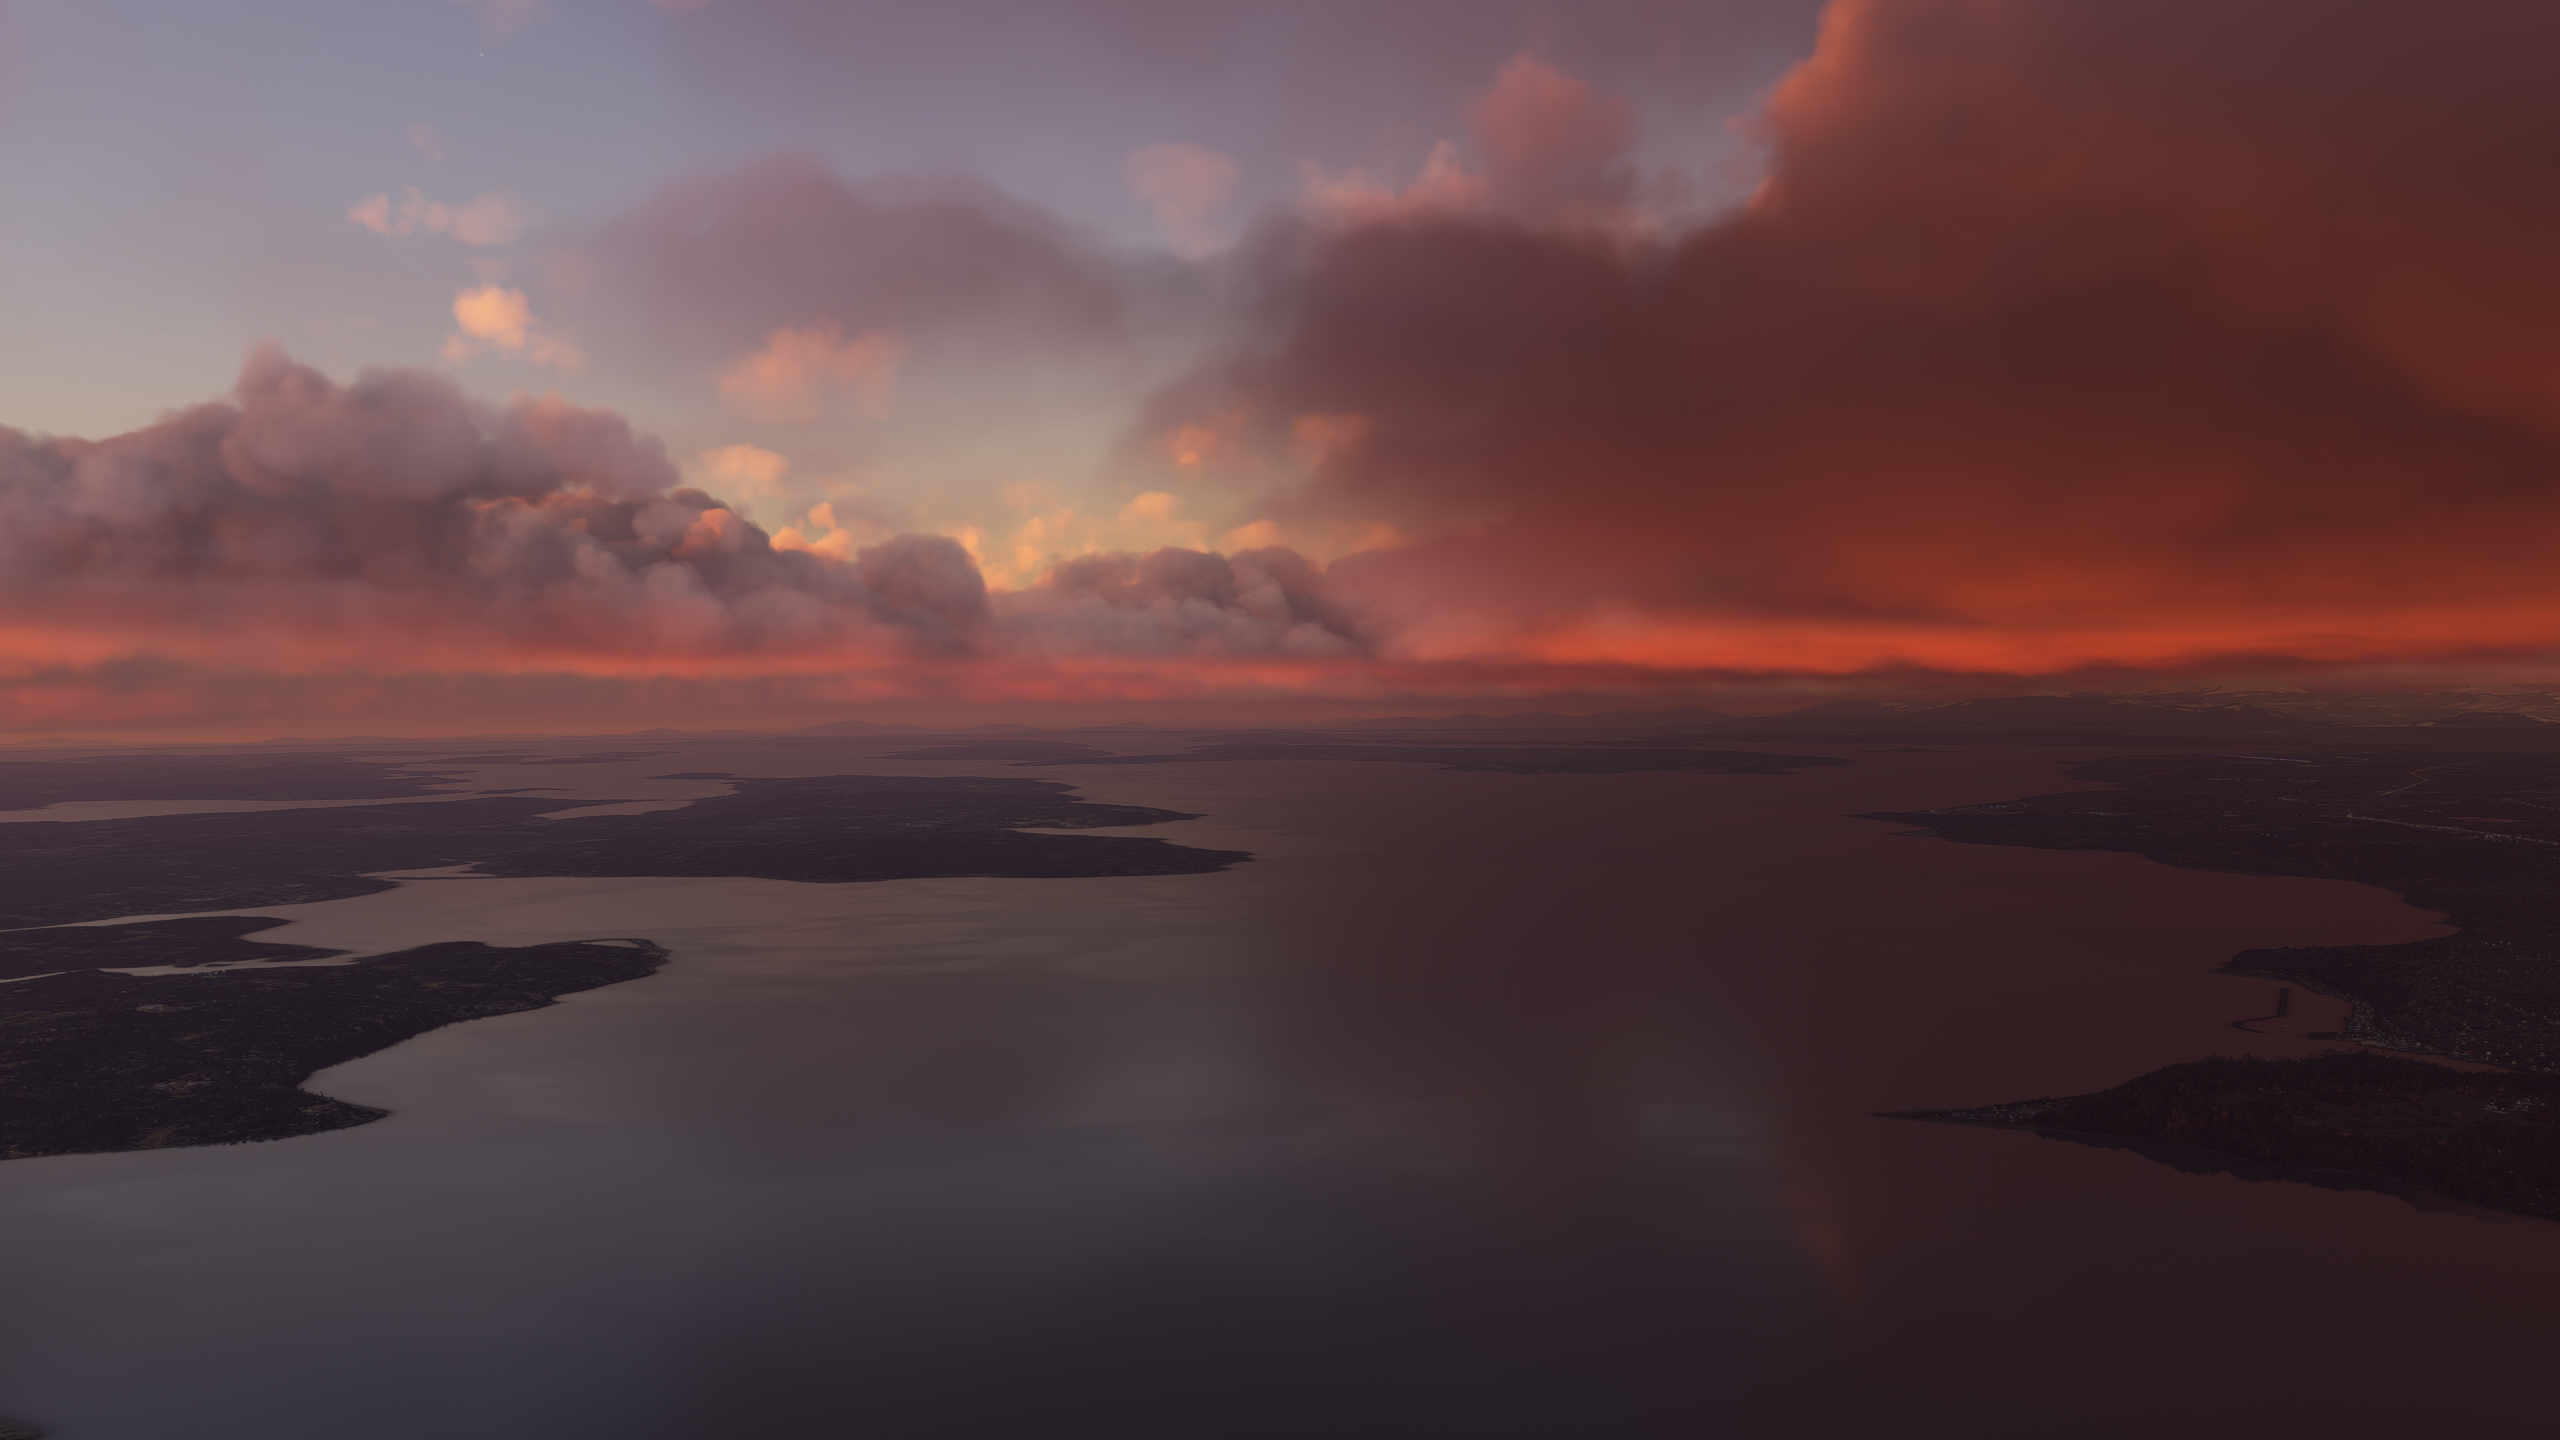 Microsoft Flight Simulator 2020 Clouds Sunset Video Games Sky Sunset Glow Water 2560x1440